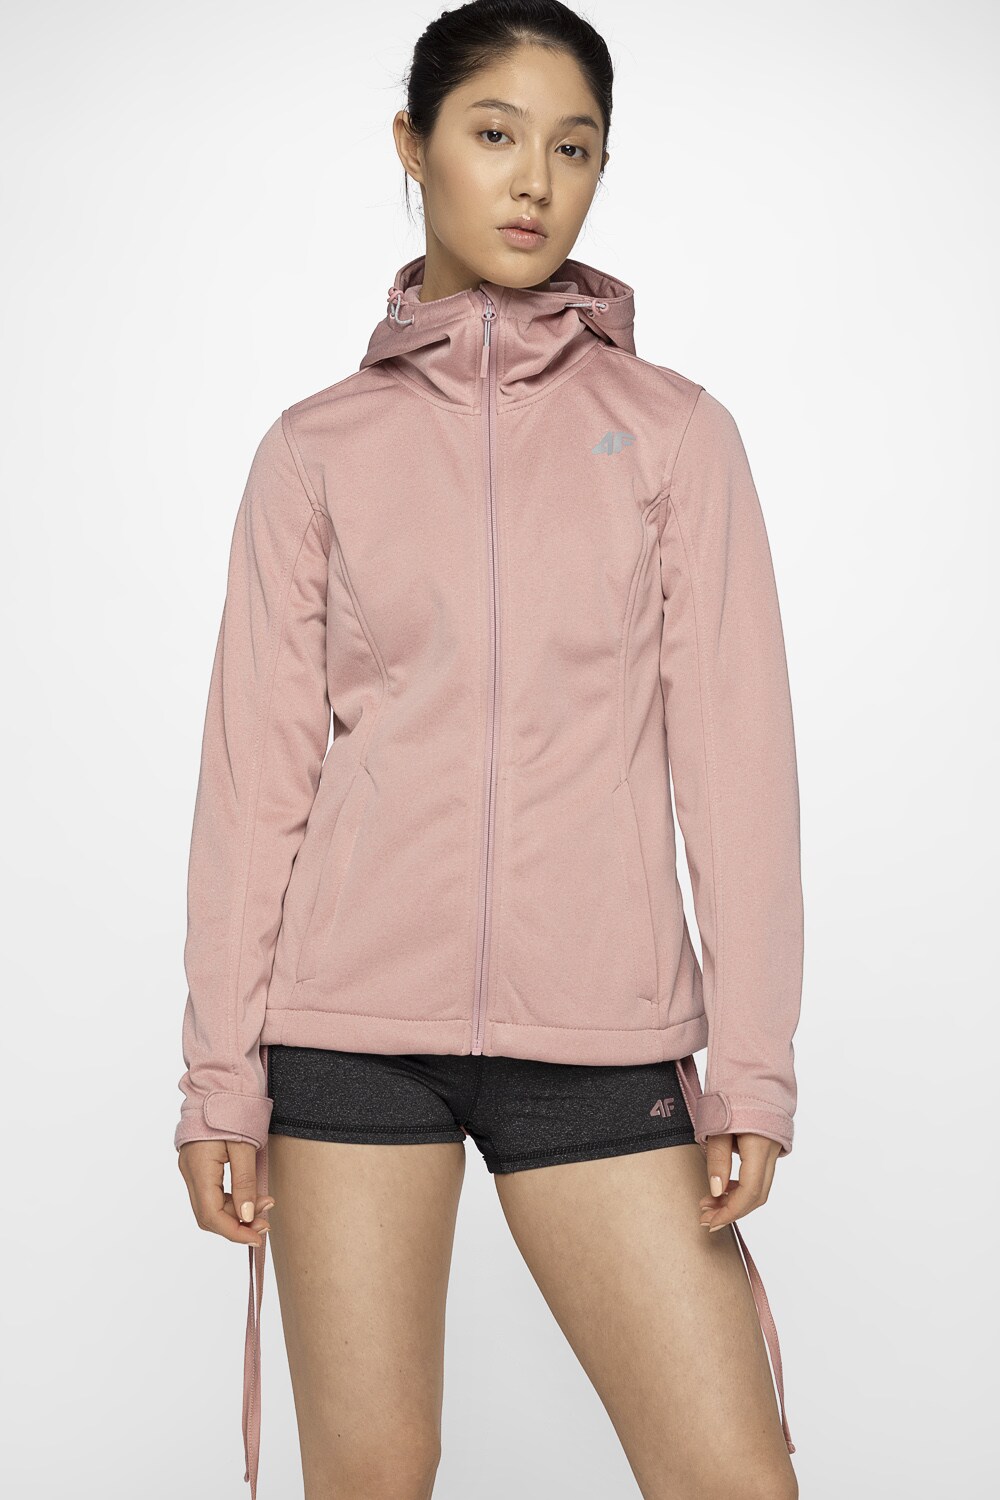 Jachetă softshell pentru femei SFD300 - roz melanj